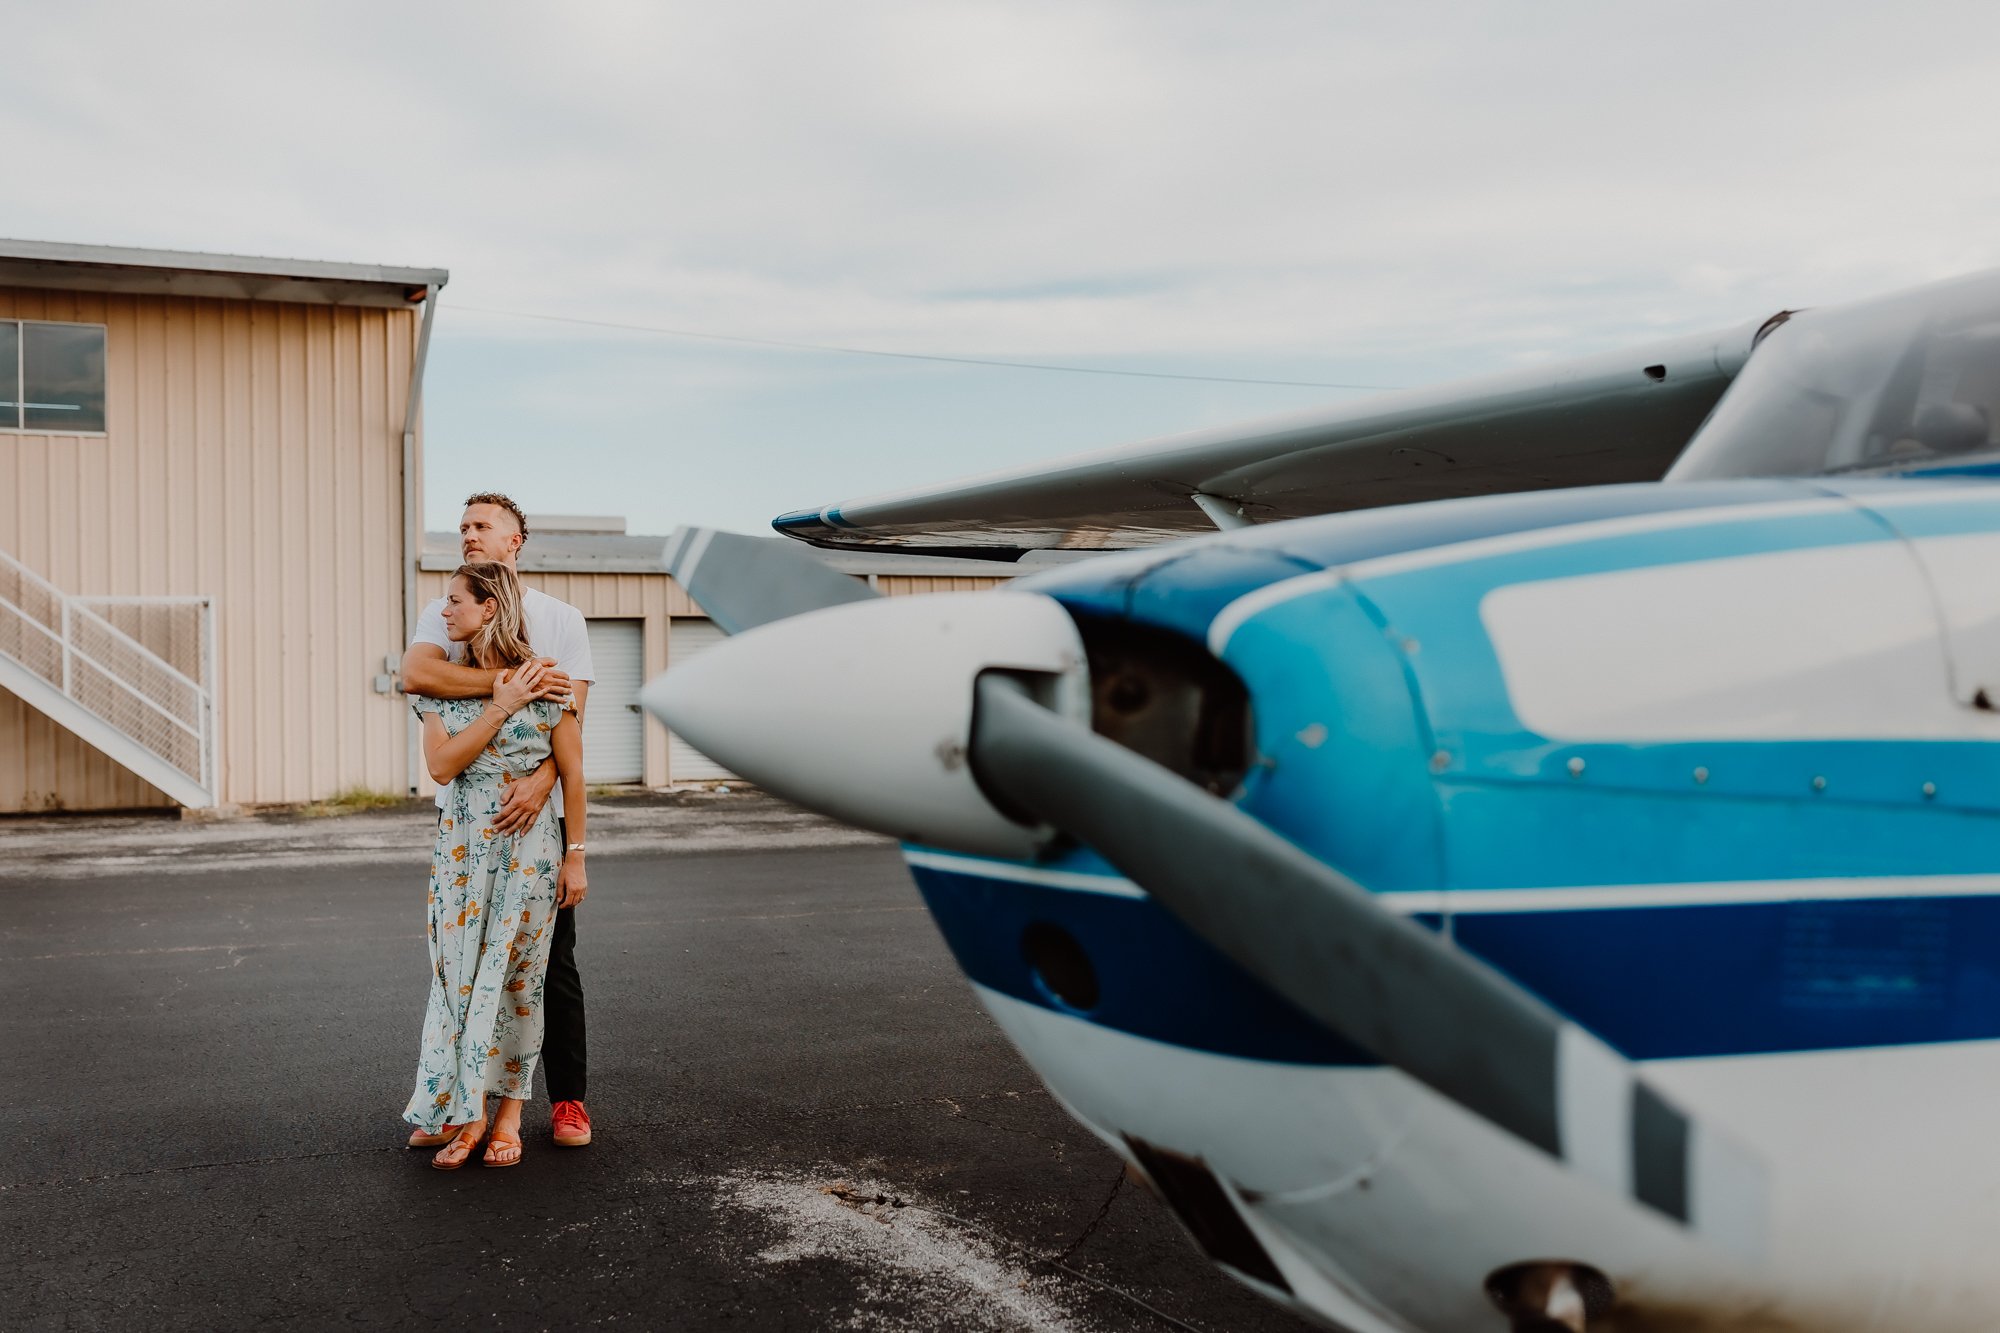 Austin engagement photos at an airplane hangar